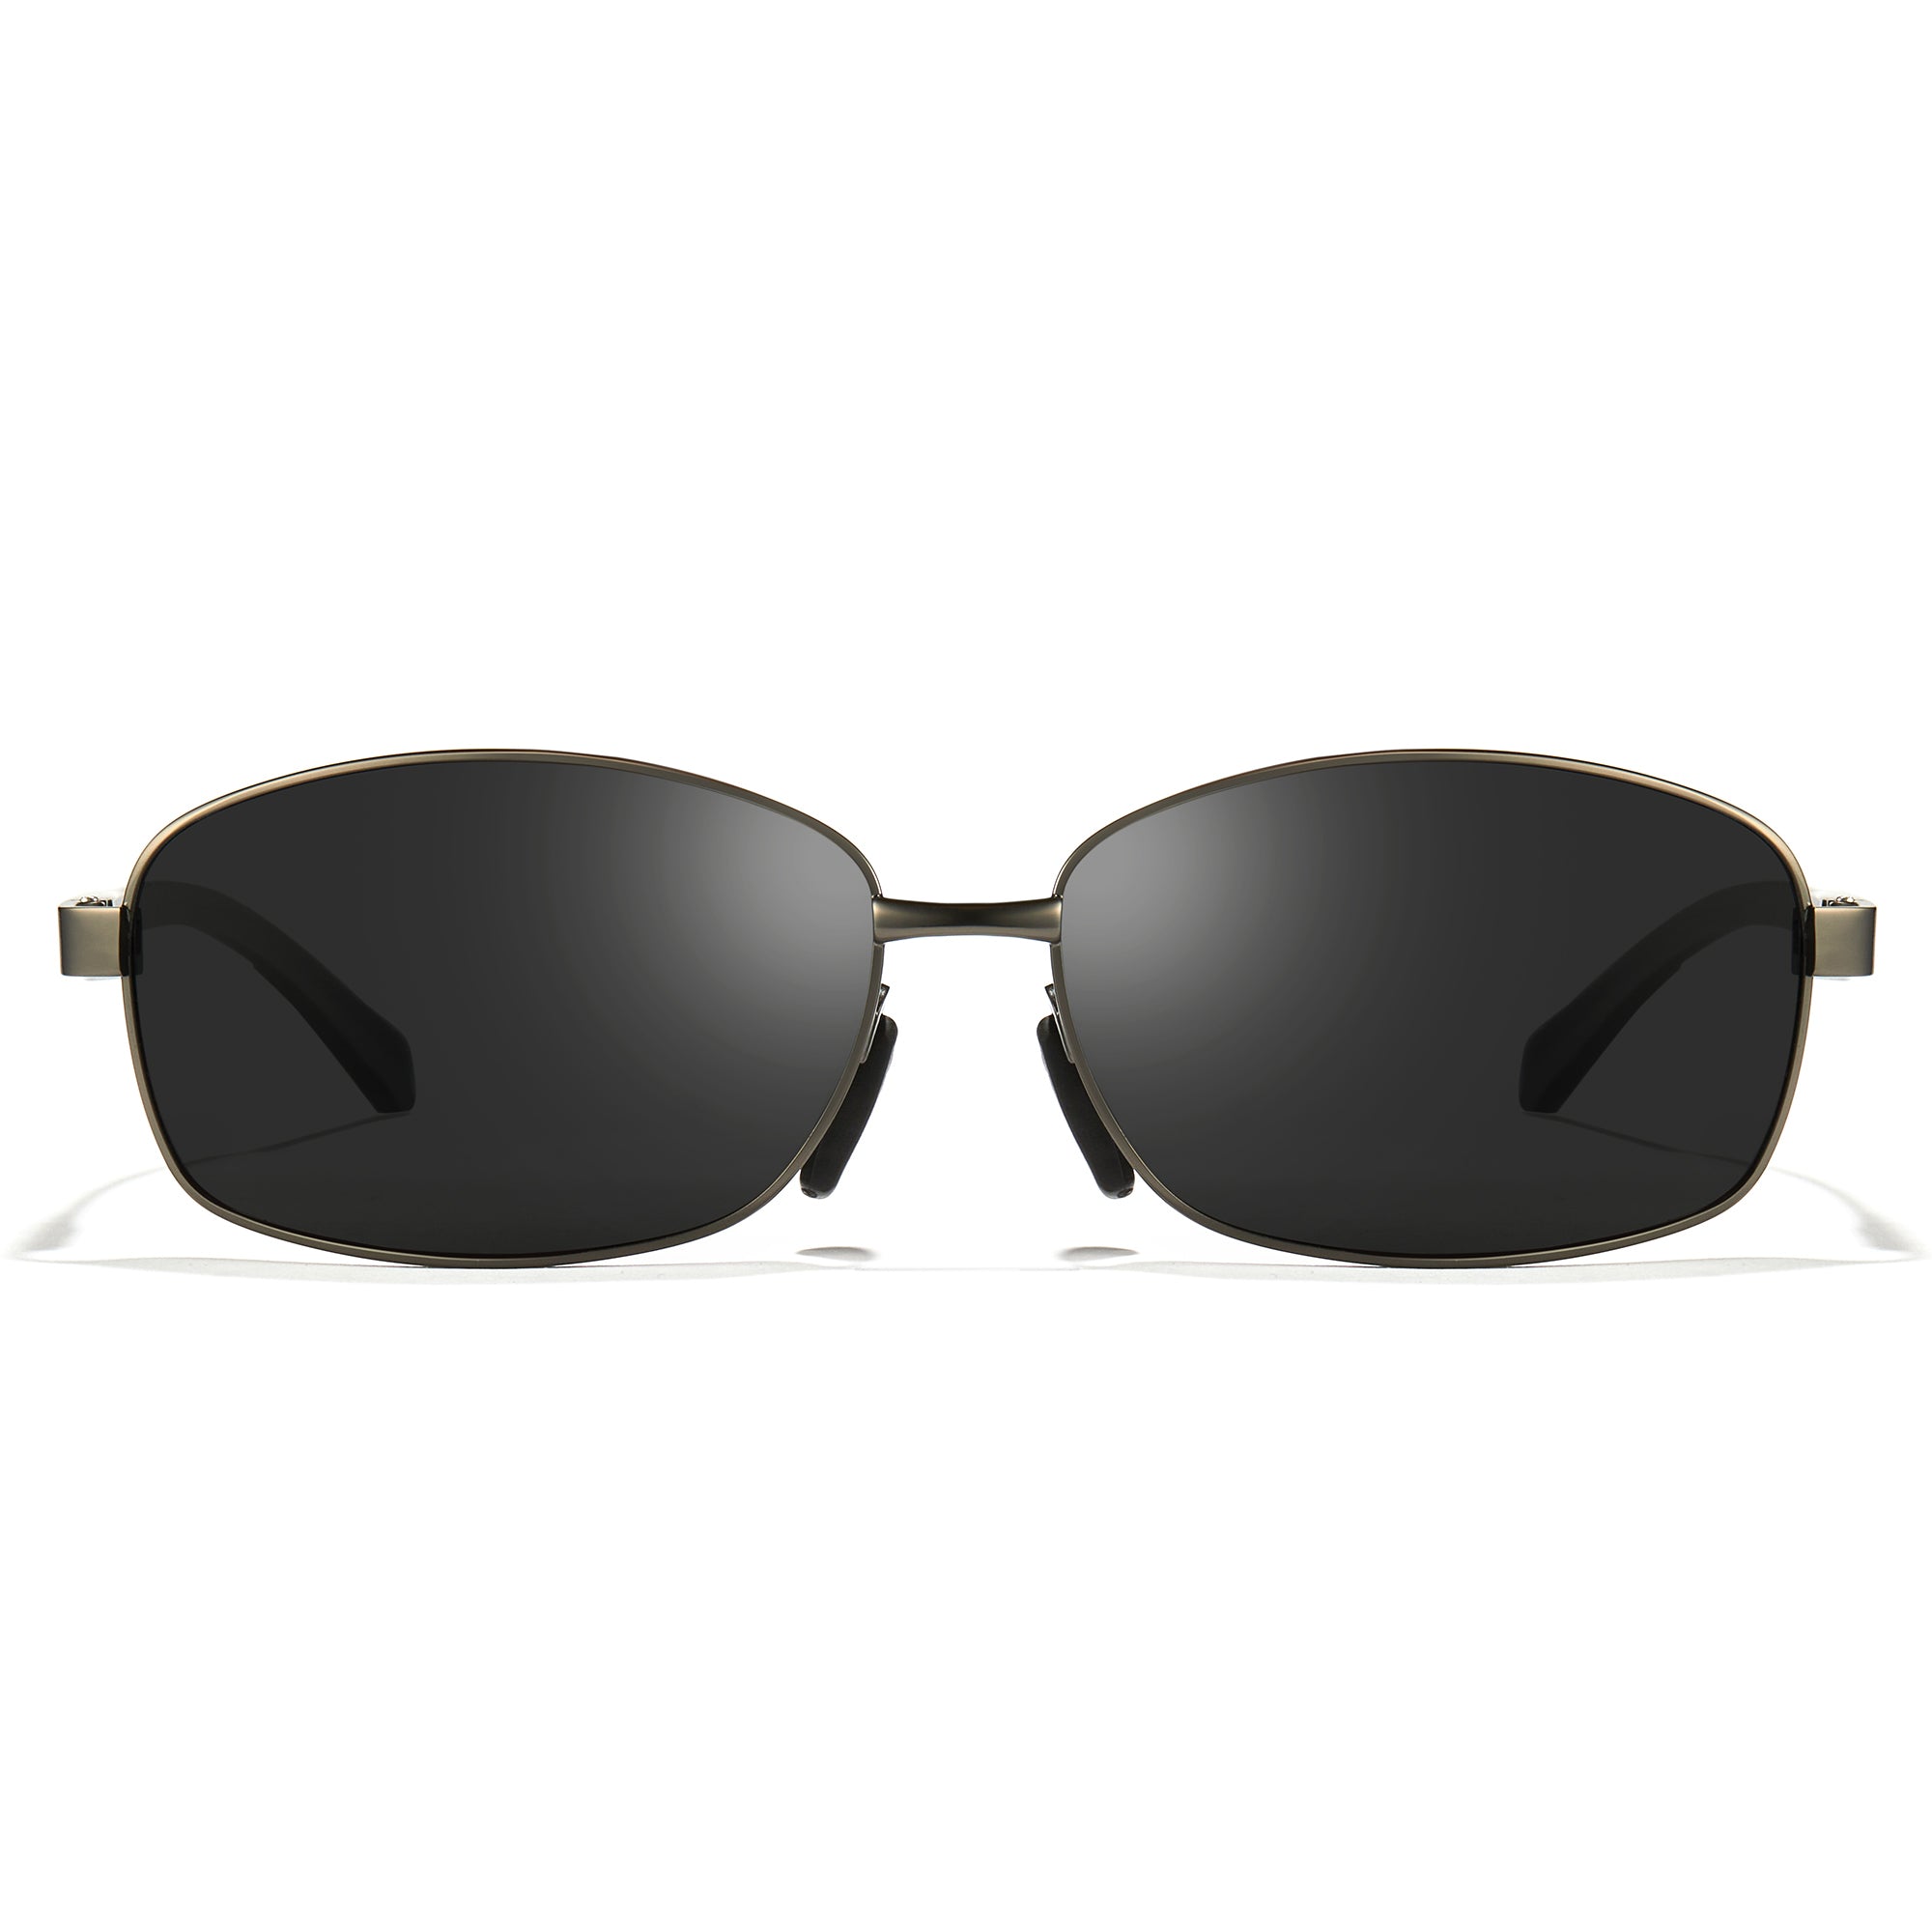 Polarized Sunglasses 1026